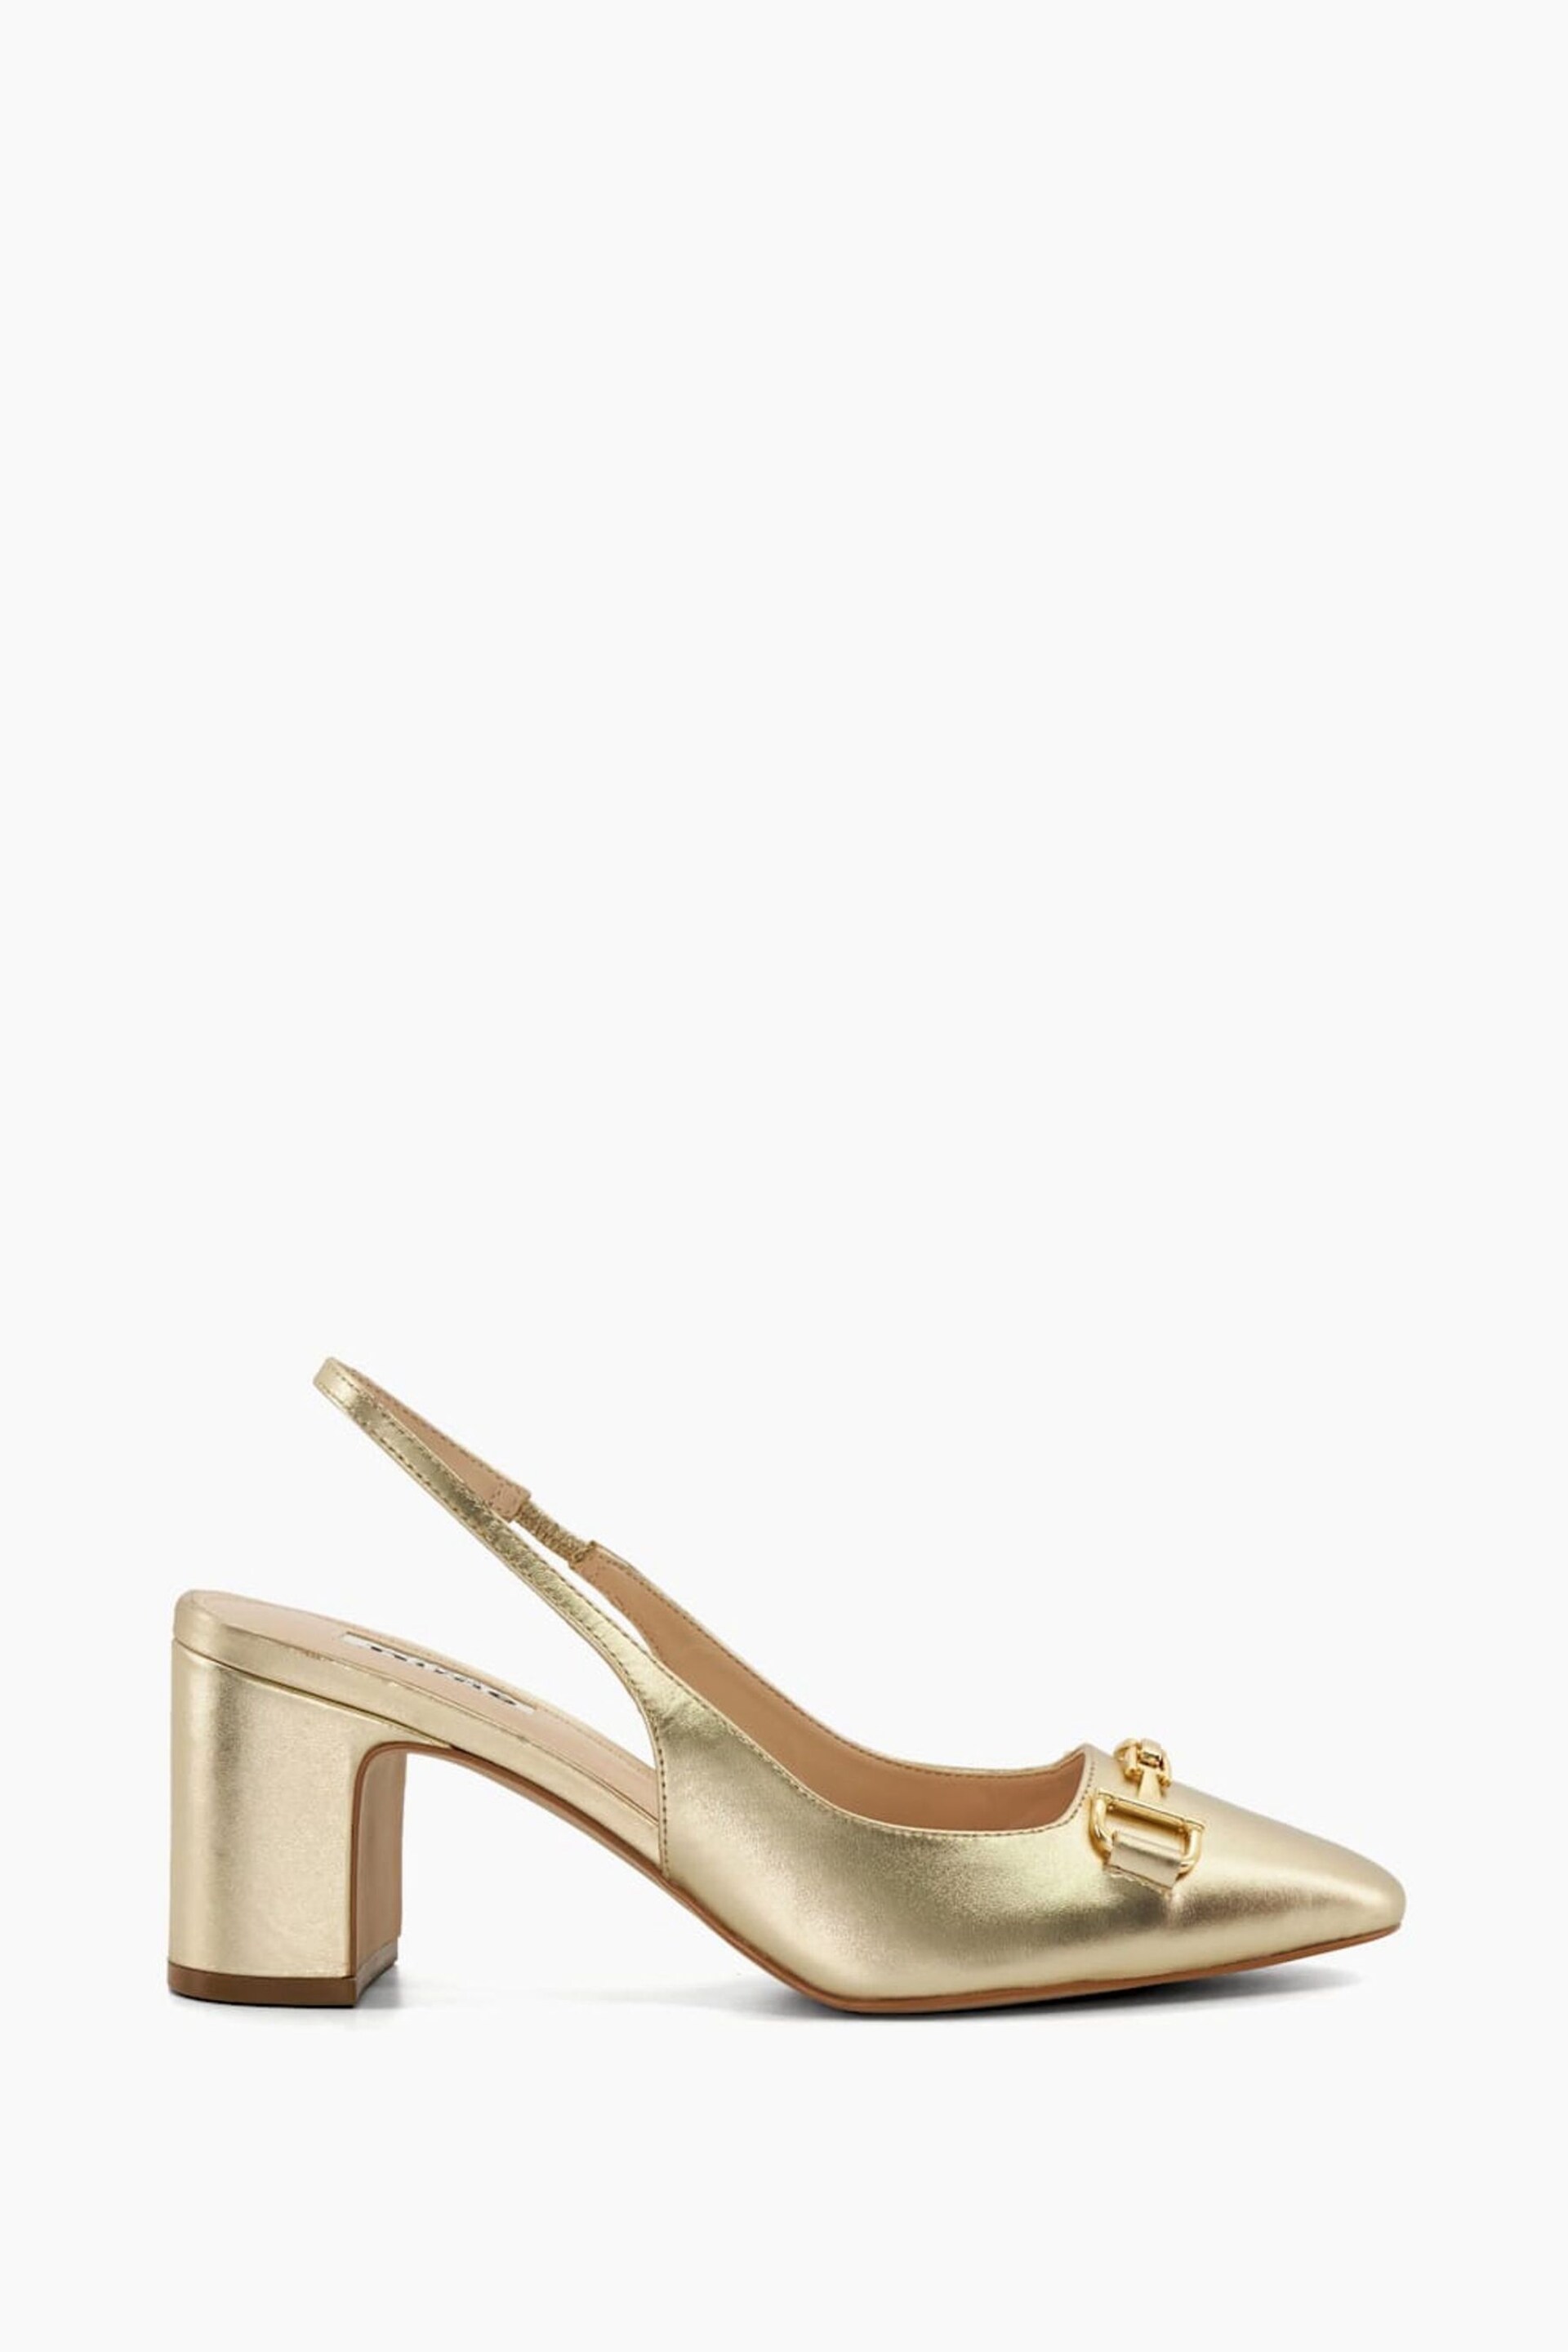 Dune London Gold Detailed Block Heel Snaffle Slingback Shoes - Image 1 of 4